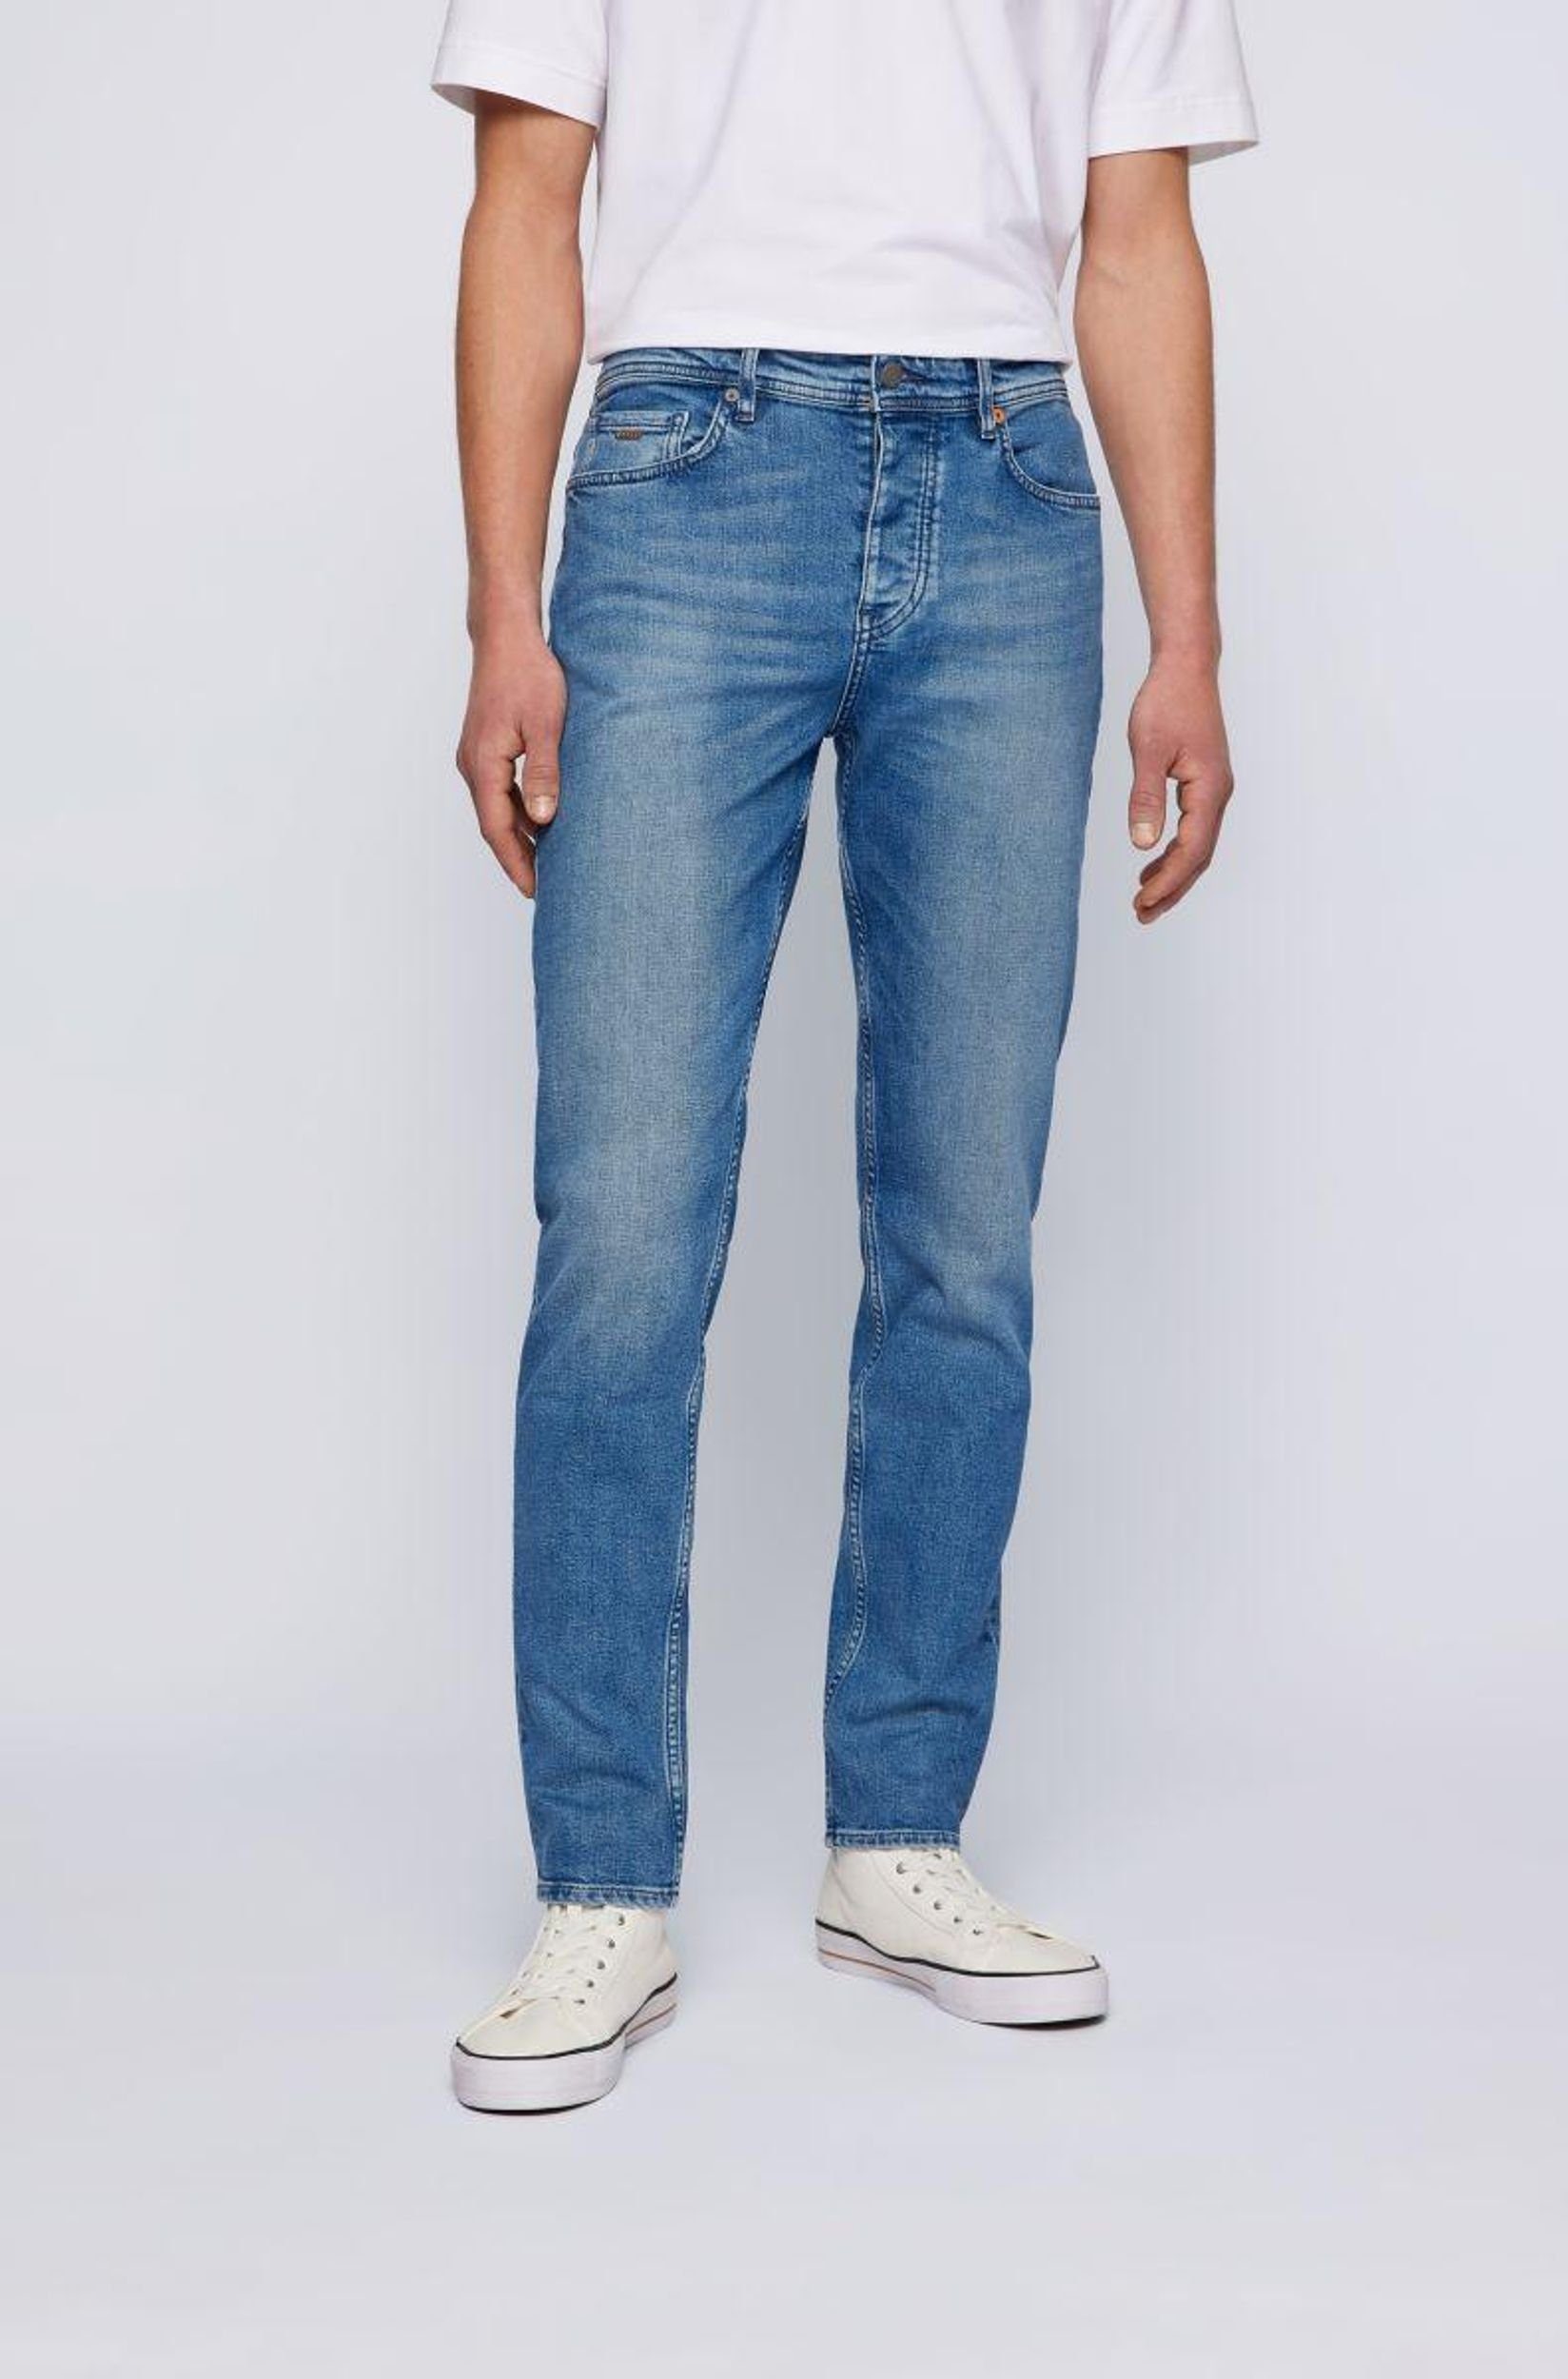 BLAUE TAPERED-FIT STRETCH-DENIM BOSS AUS Slim-fit-Jeans ORANGE KOMFORTABLEM JEANS